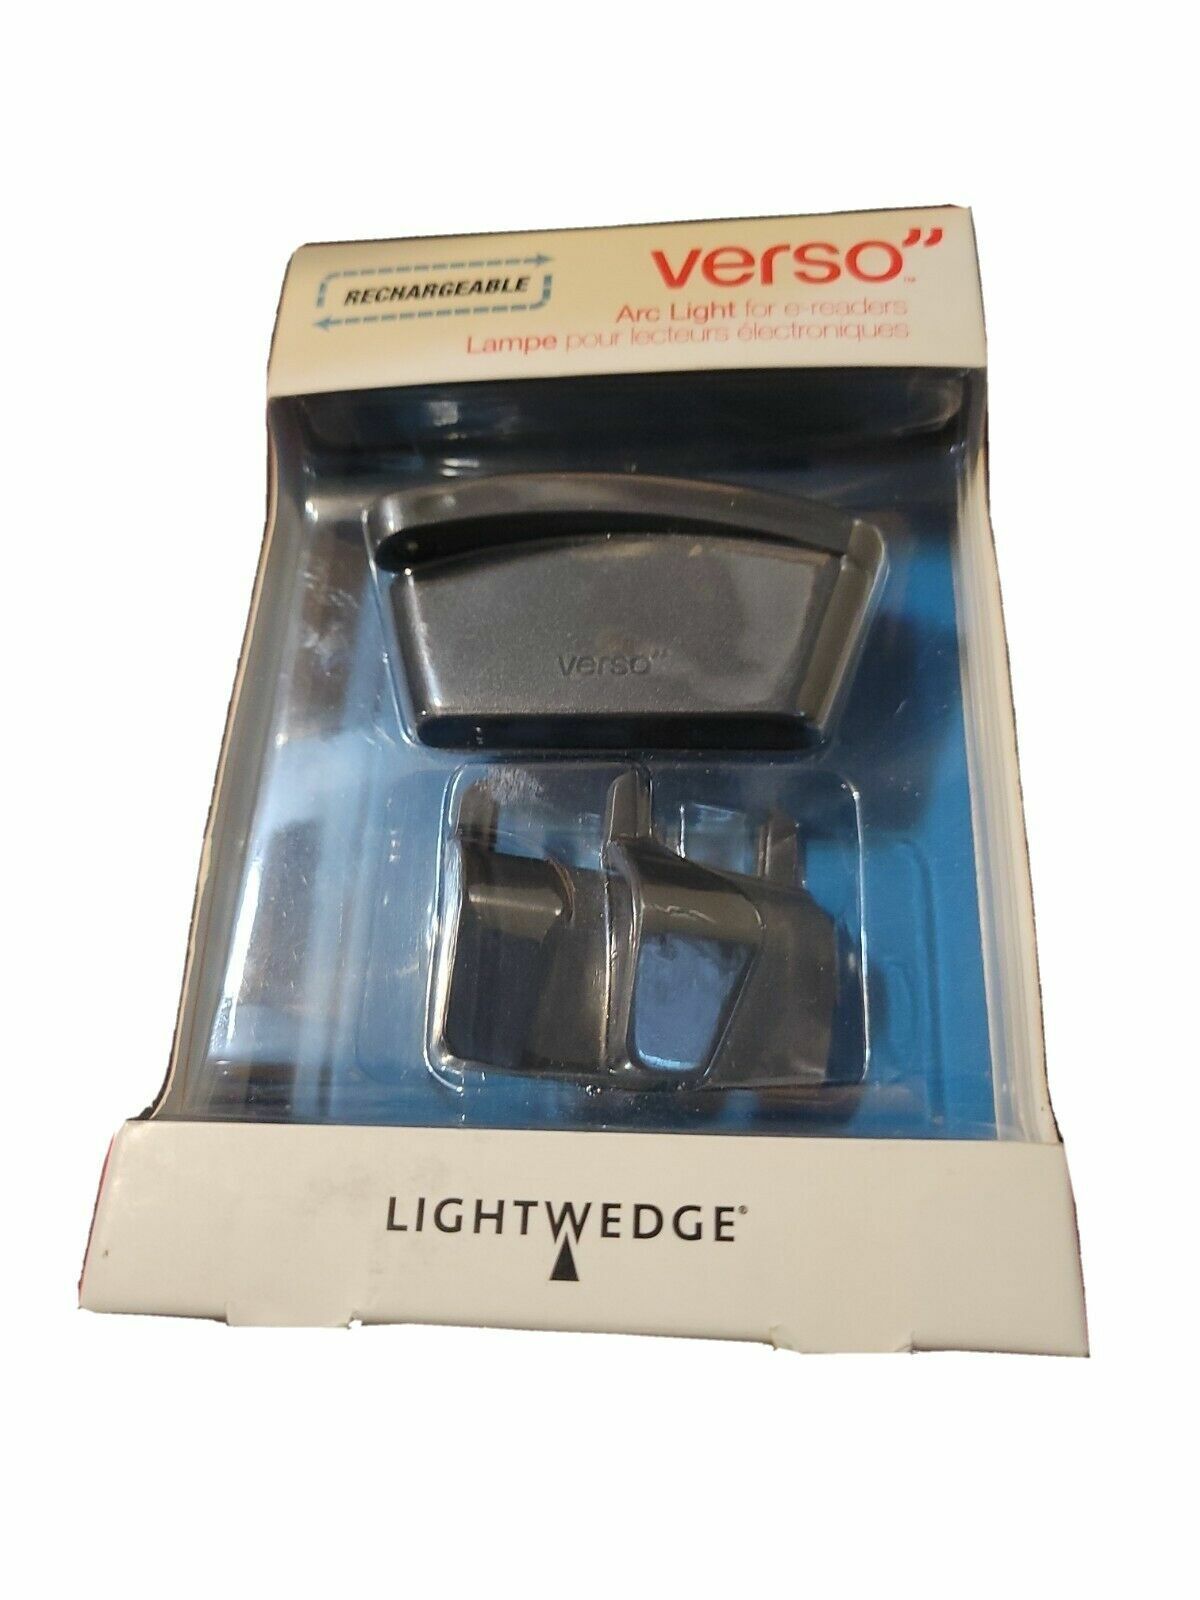 Lightwedge Verso Vr002-001-23 Rechargeable Arc Light For E-readers